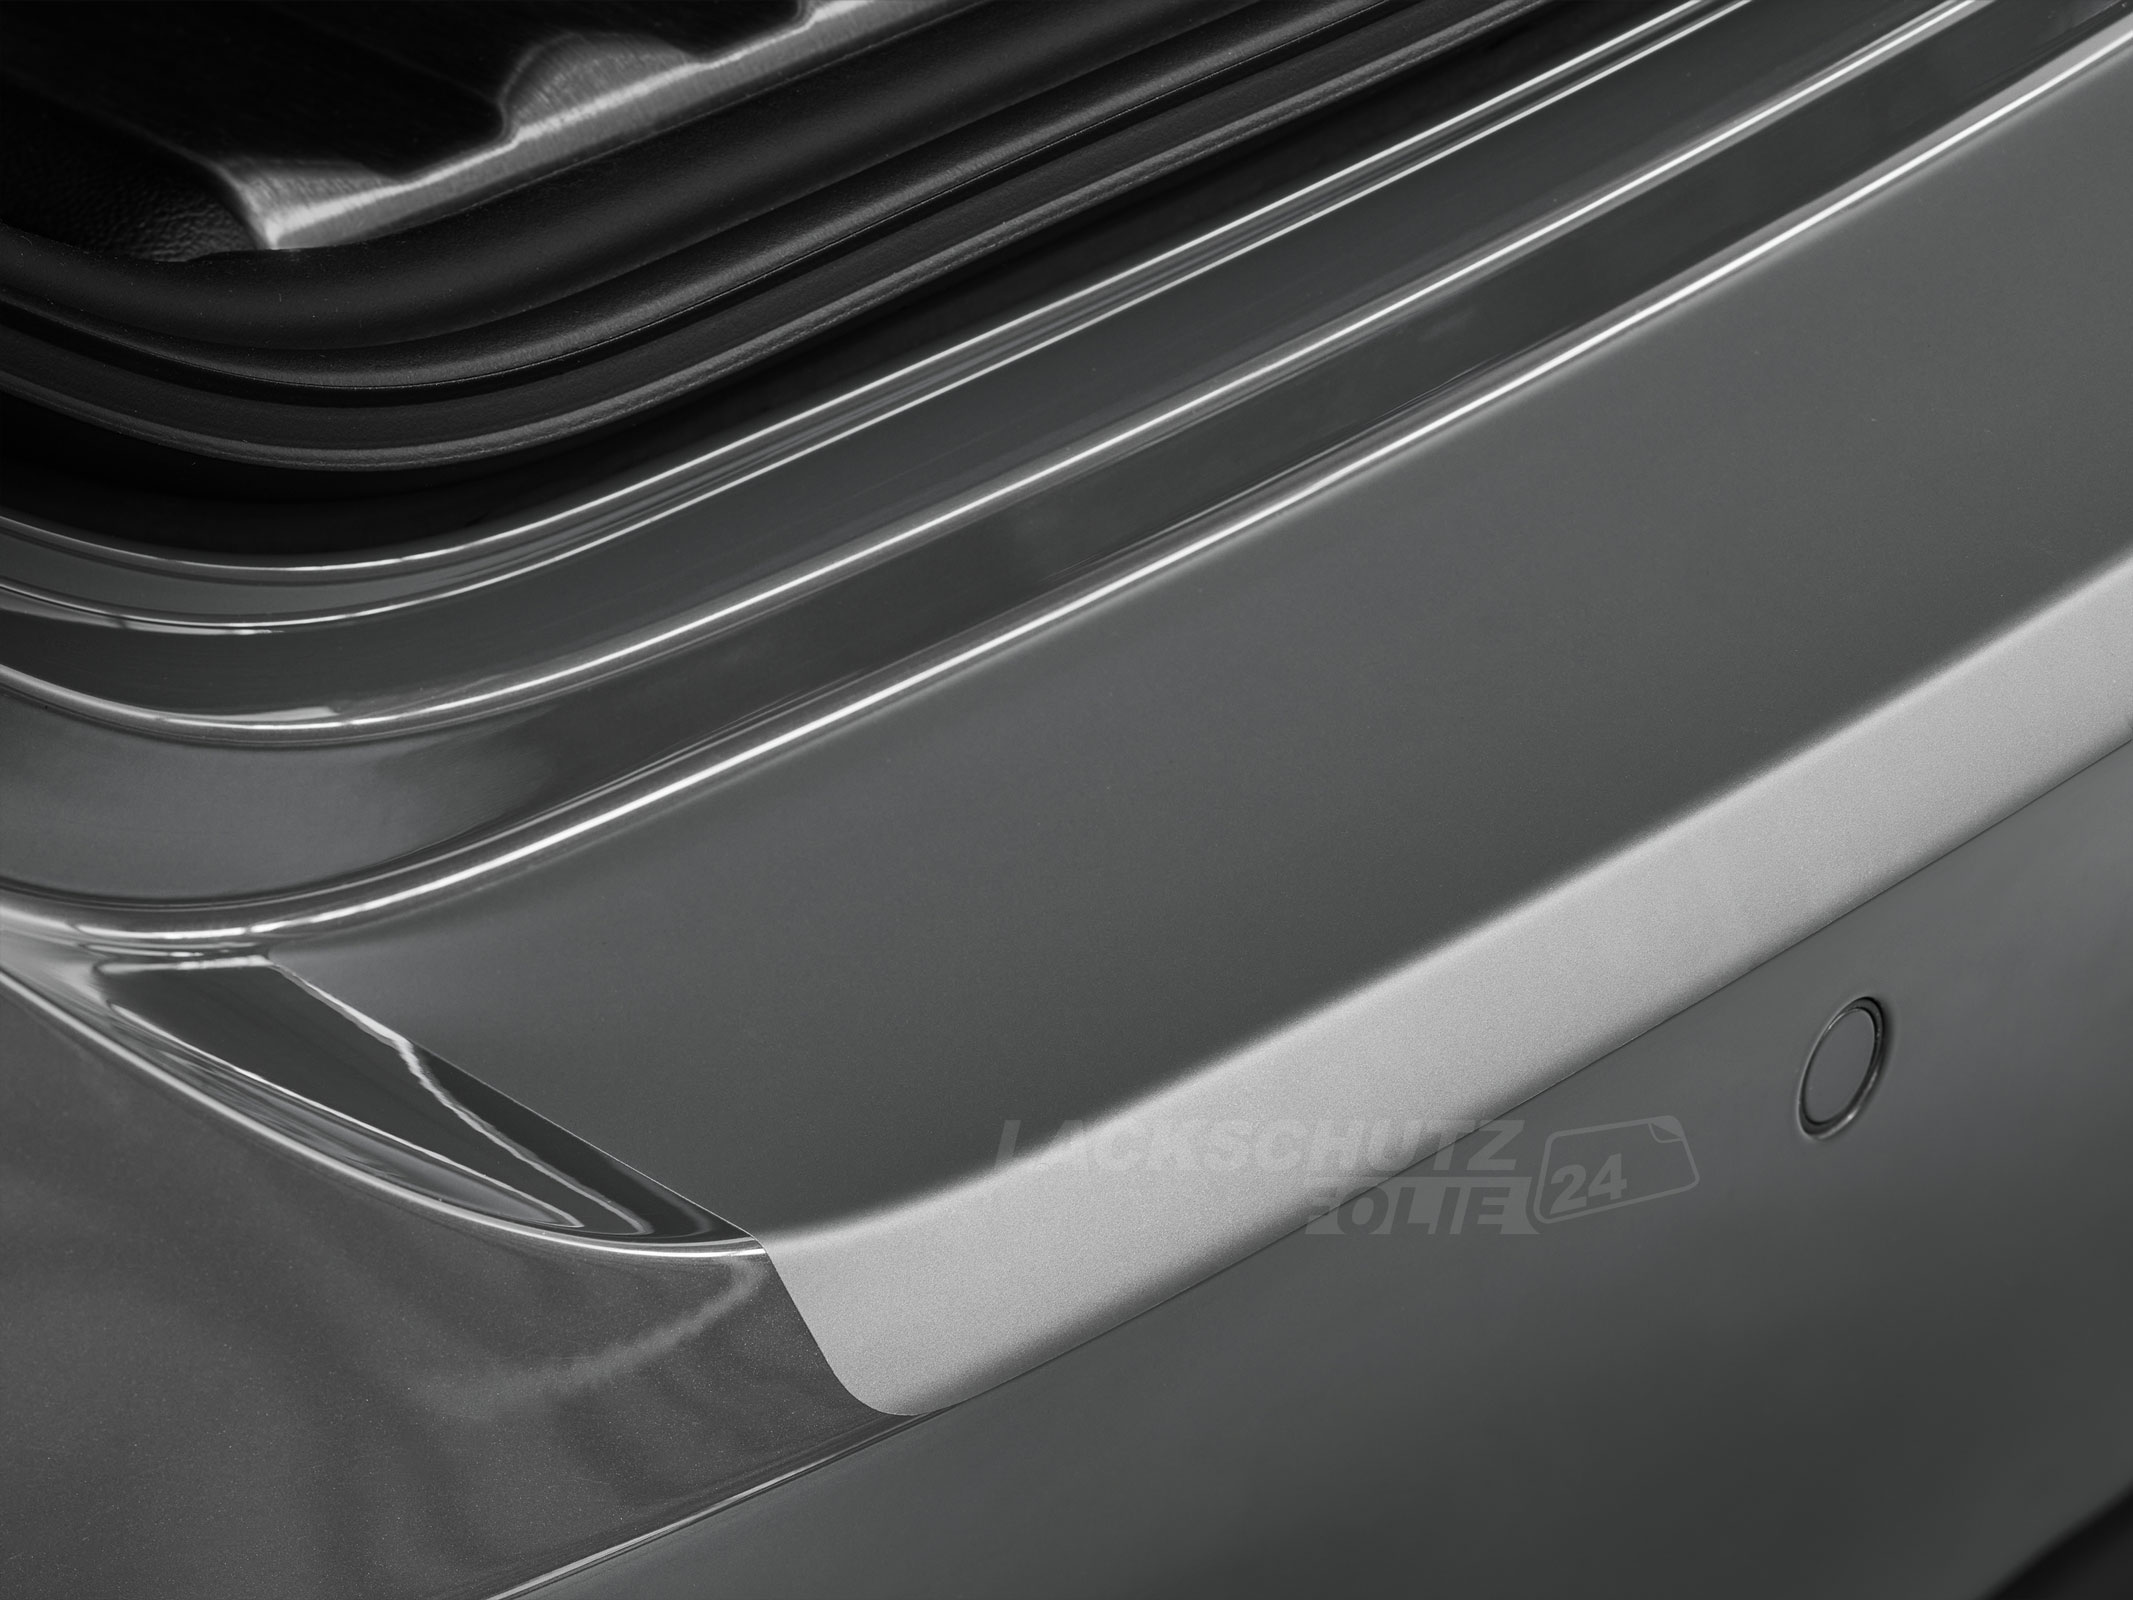 Ladekantenschutzfolie - Transparent Glatt MATT 110 µm stark  für Audi A3 Stufenheck / Limousine Typ 8V, BJ 02/2013-2020